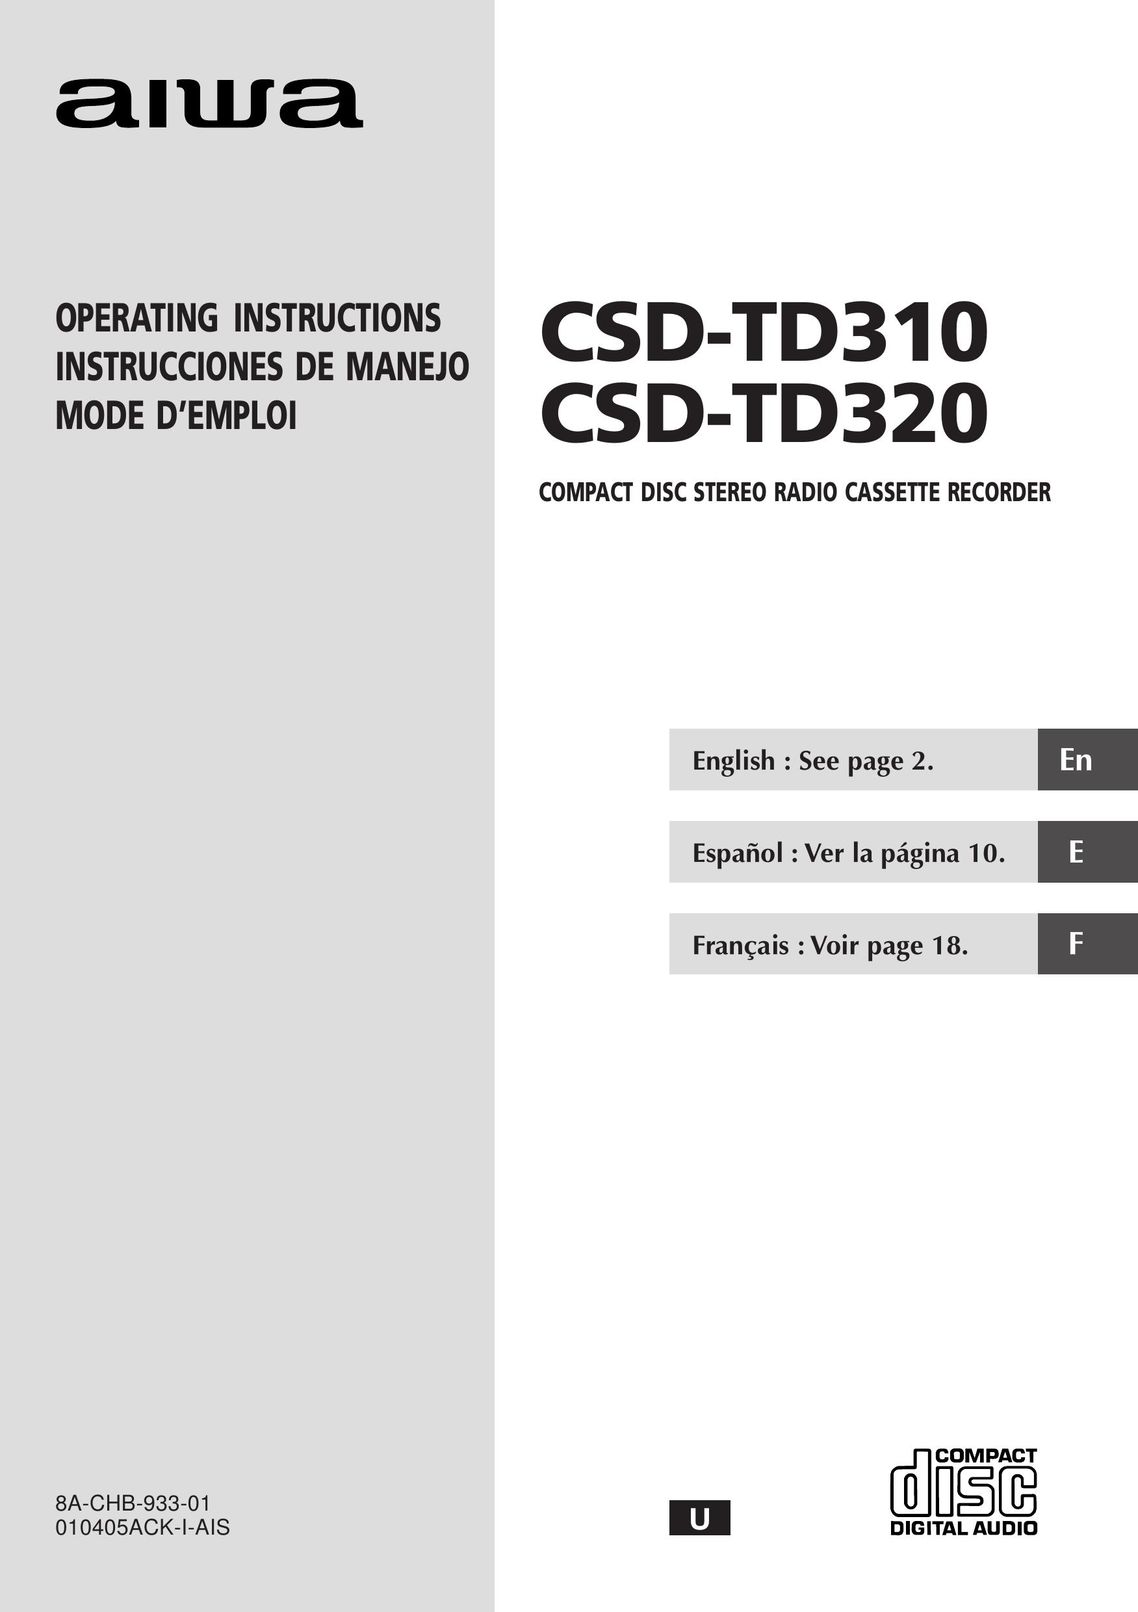 Aiwa CSD-TD310 Car Stereo System User Manual